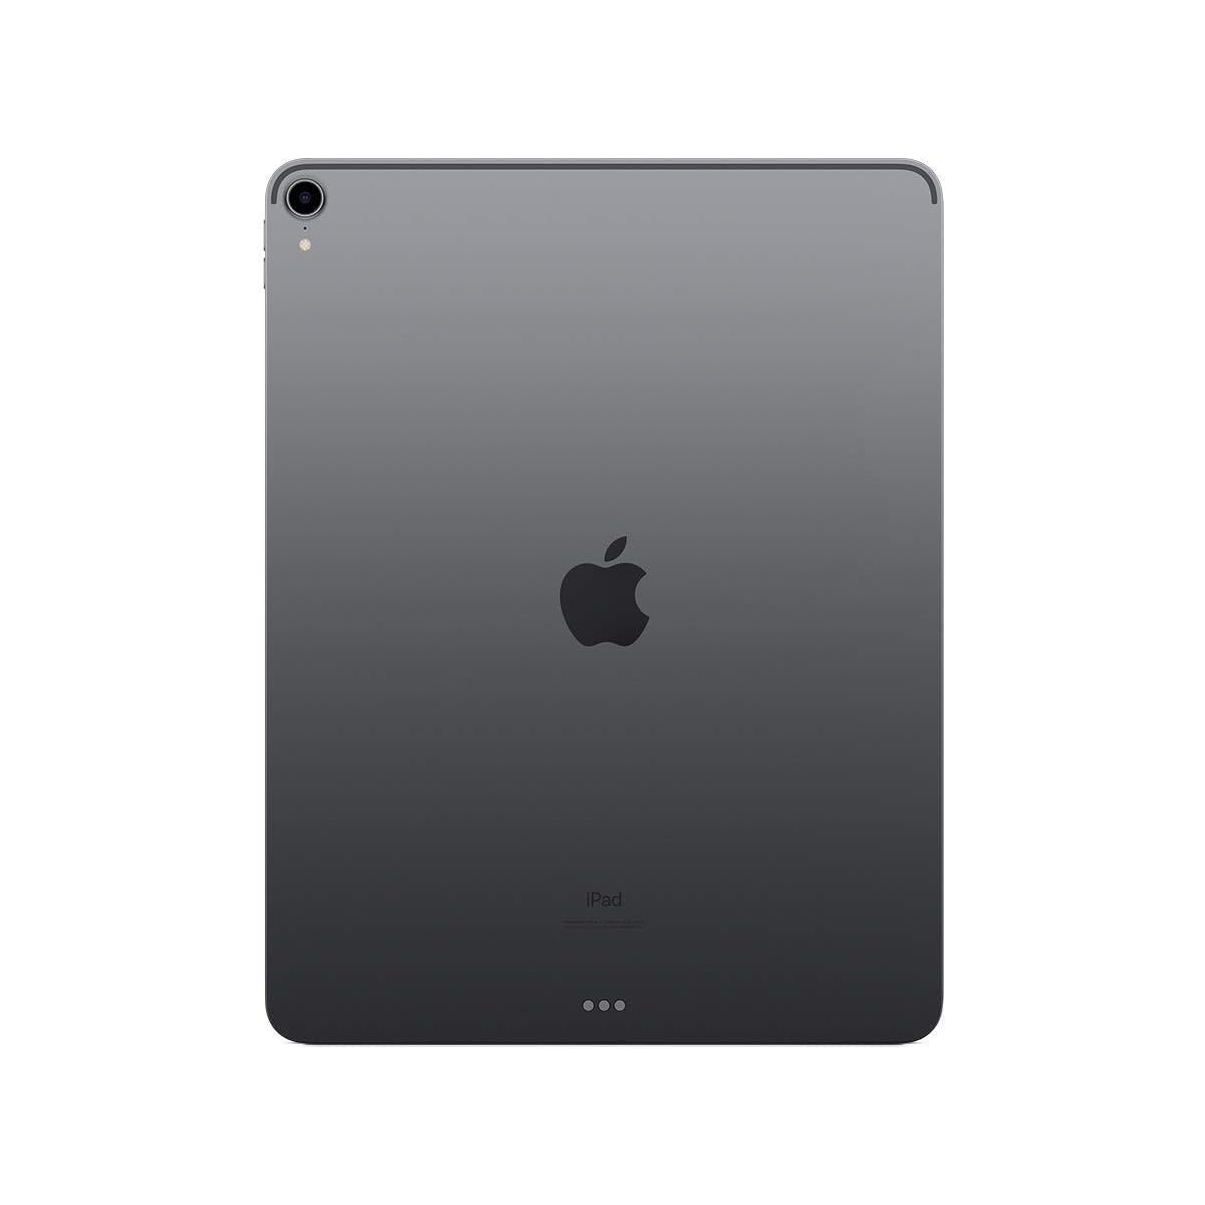 APPLE REFURBISHED (*) iPad Pro Tablet, spacegrau (2018) A1895, 12.9 12,9 GB, Zoll, 64